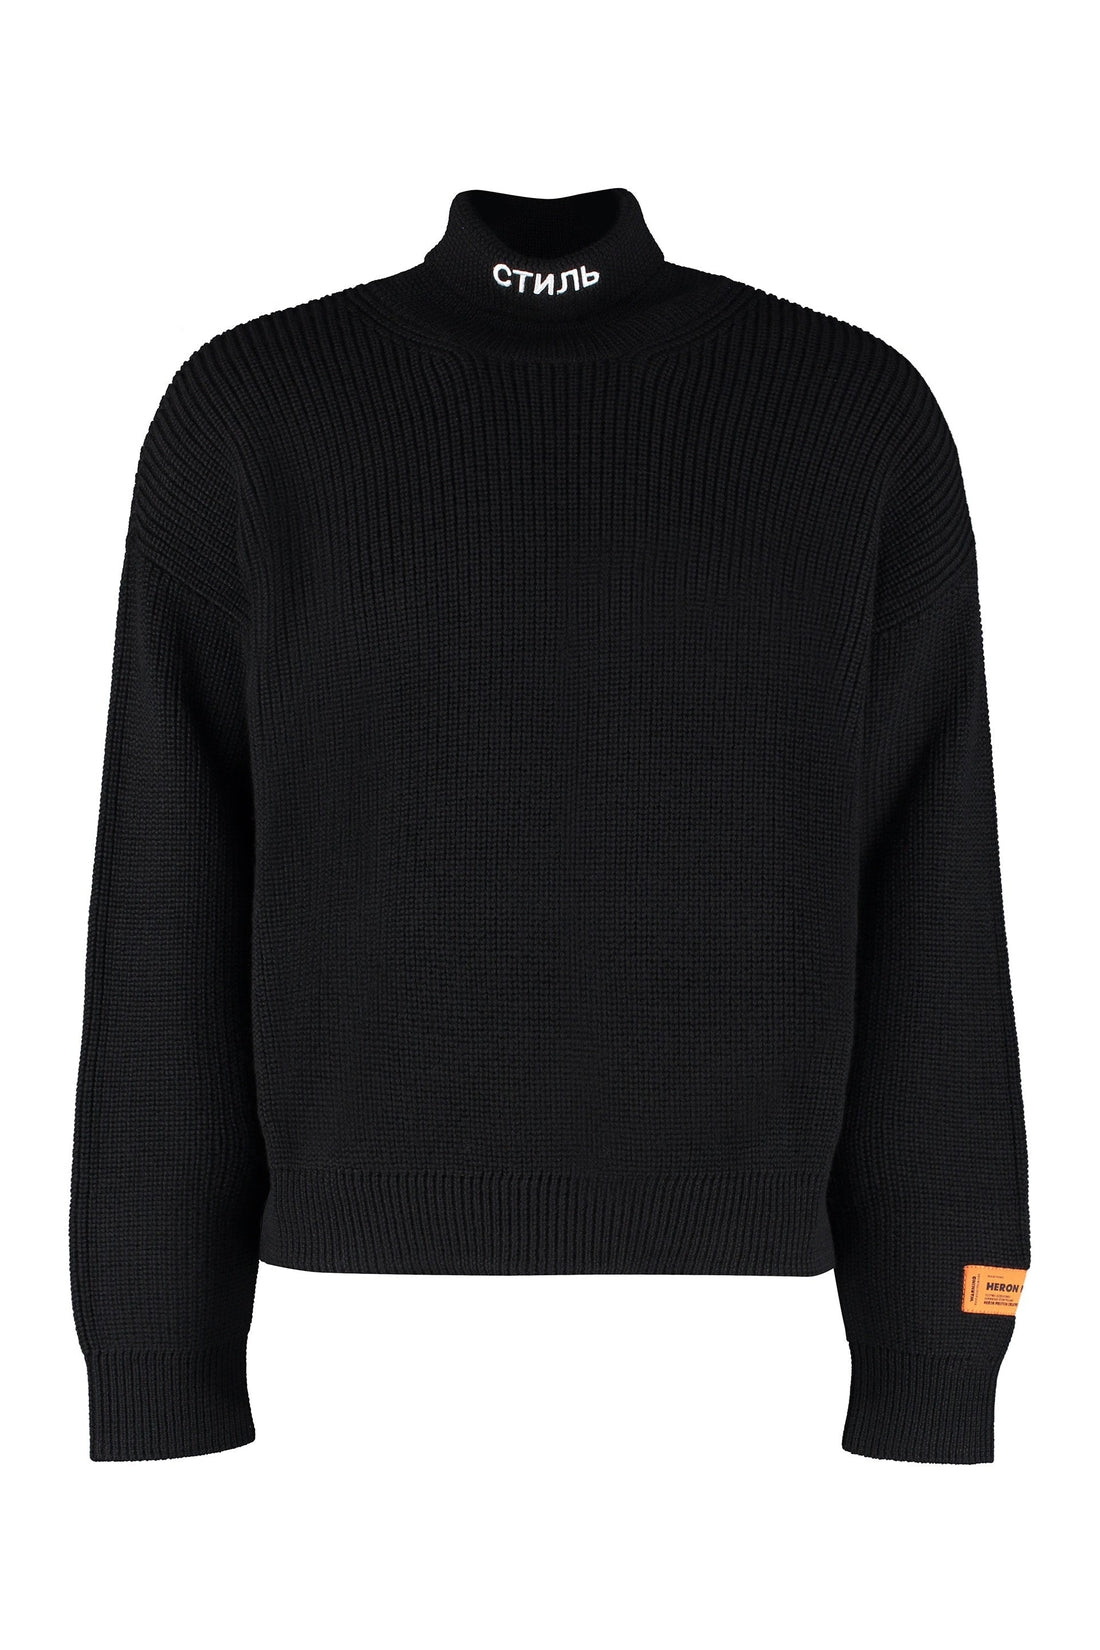 Heron Preston-OUTLET-SALE-Wool turtleneck sweater-ARCHIVIST